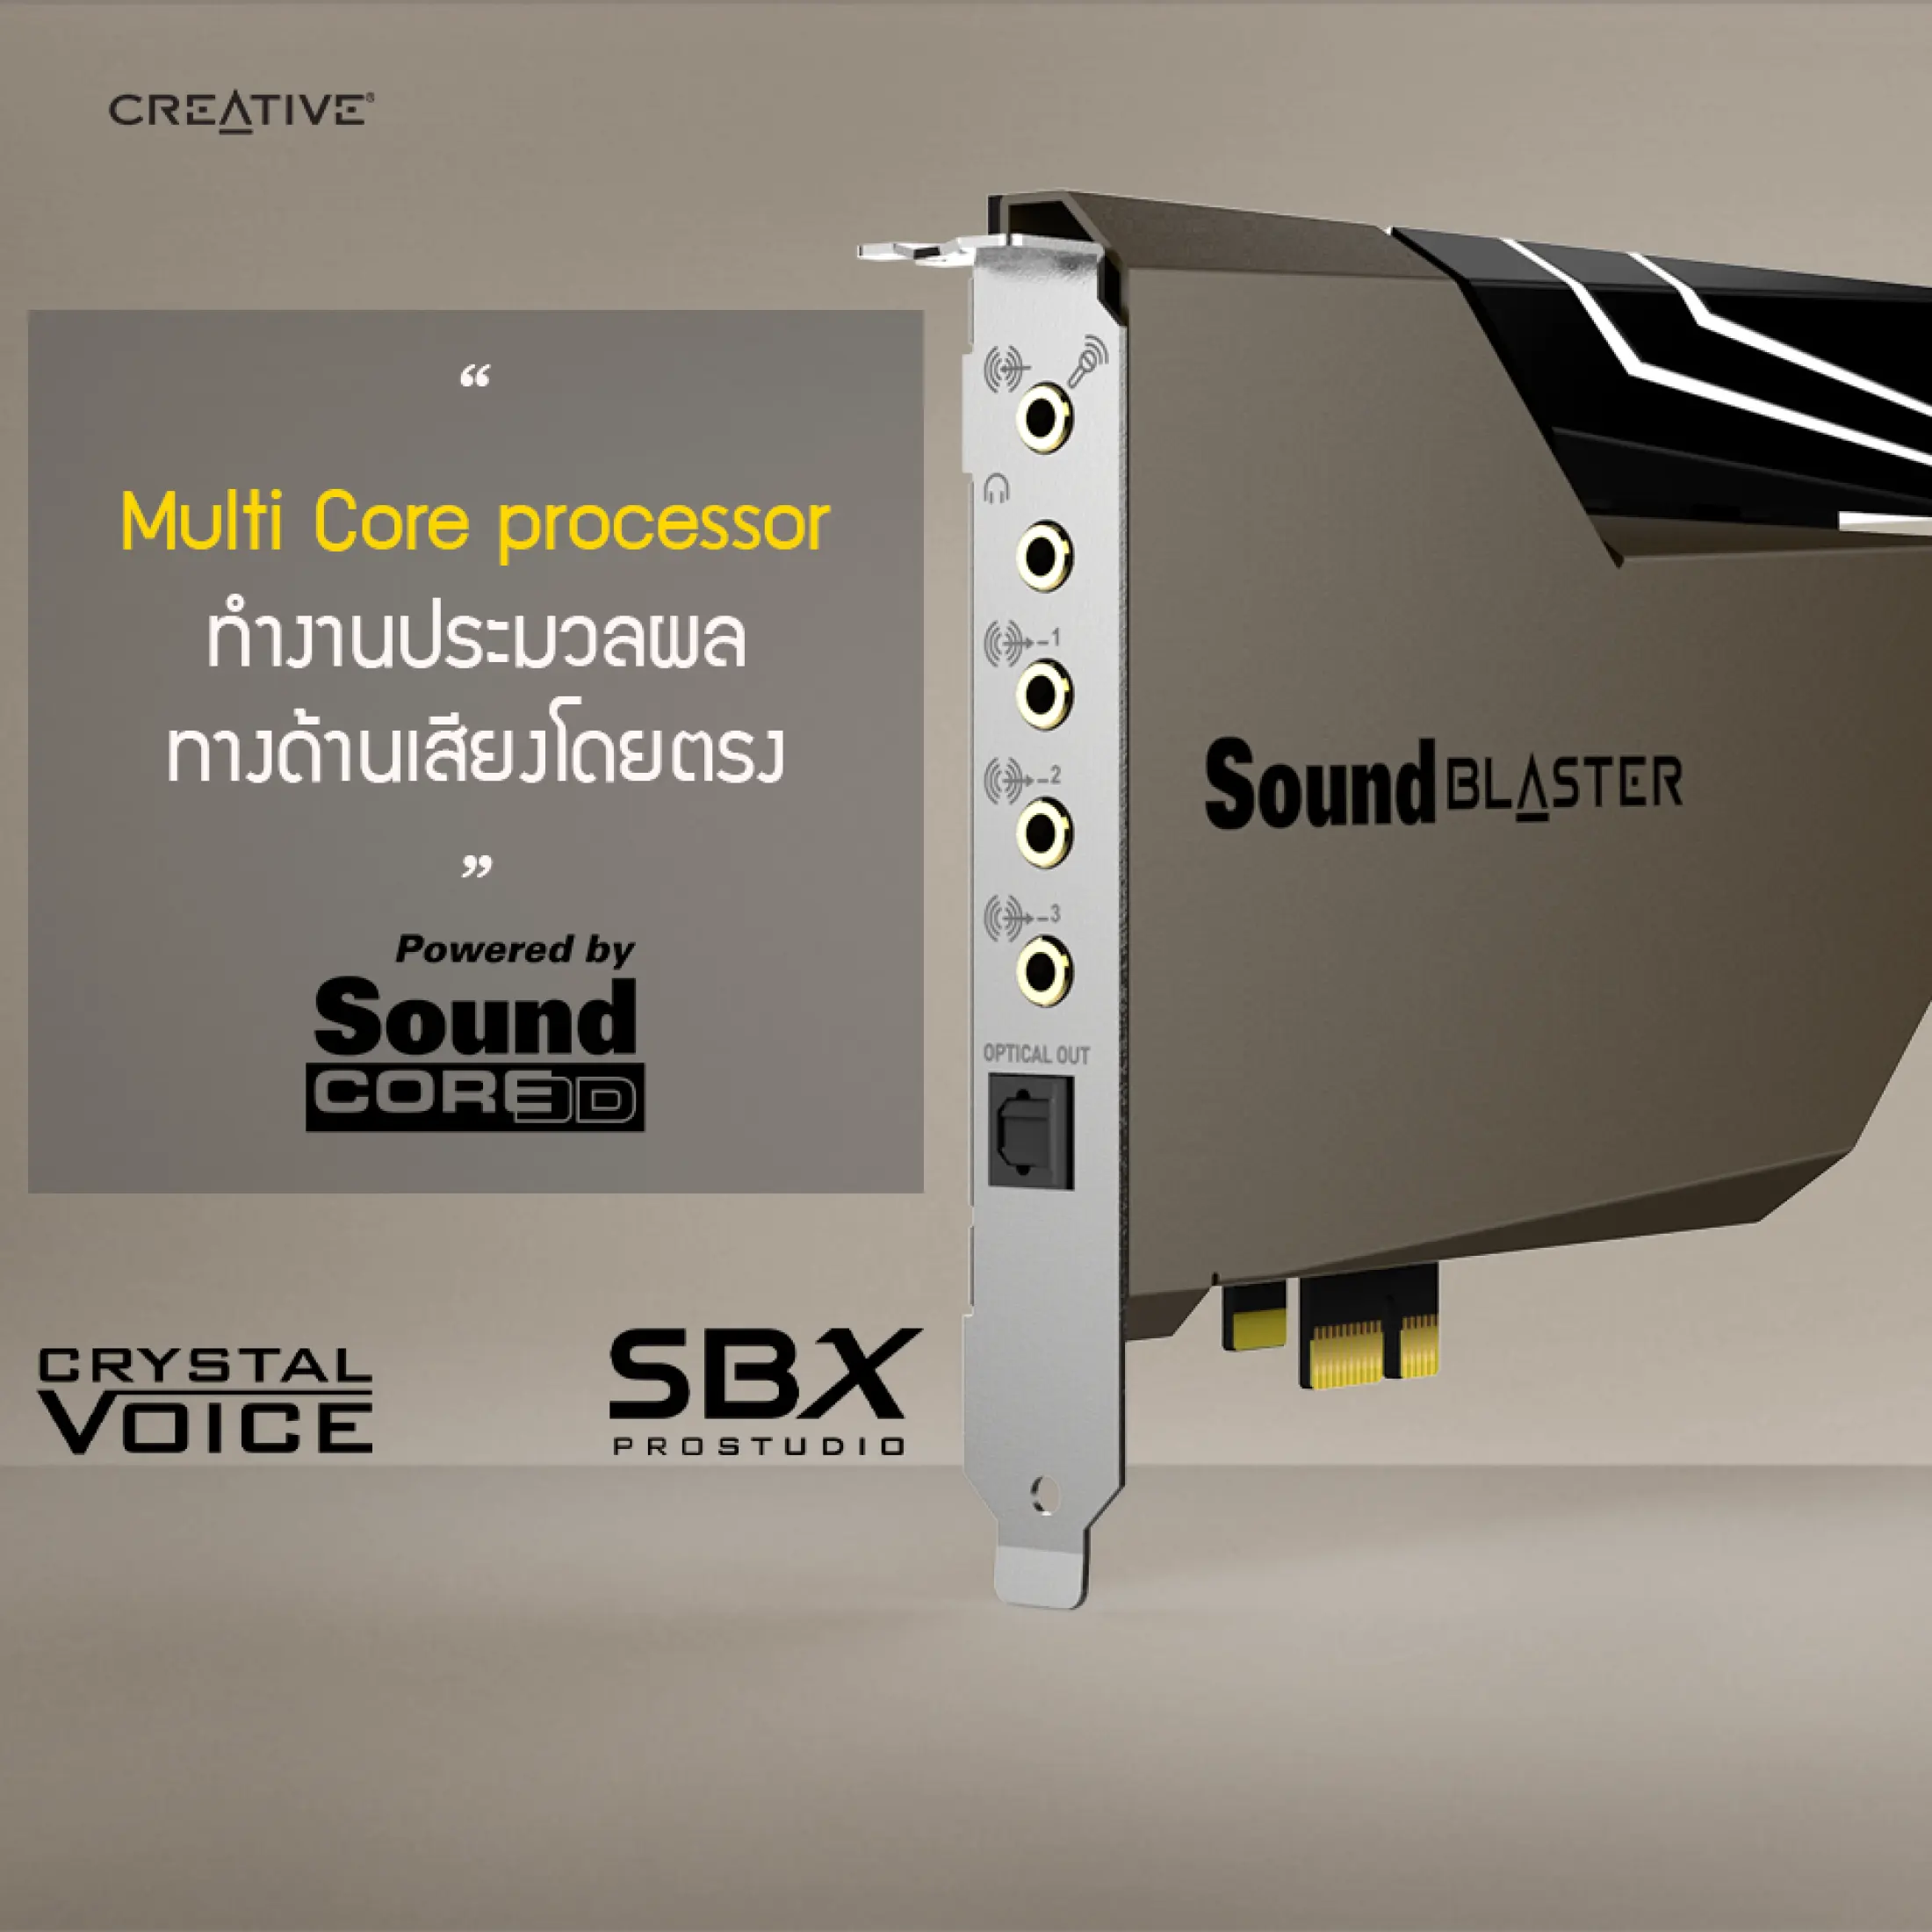 Creative Sound Blaster Ae 7 ของแท ร บประก นศ นย ไทย Hi Res Pci E Dac And Amp Sound Card จ ดเต มค ณภาพ Lazada Co Th